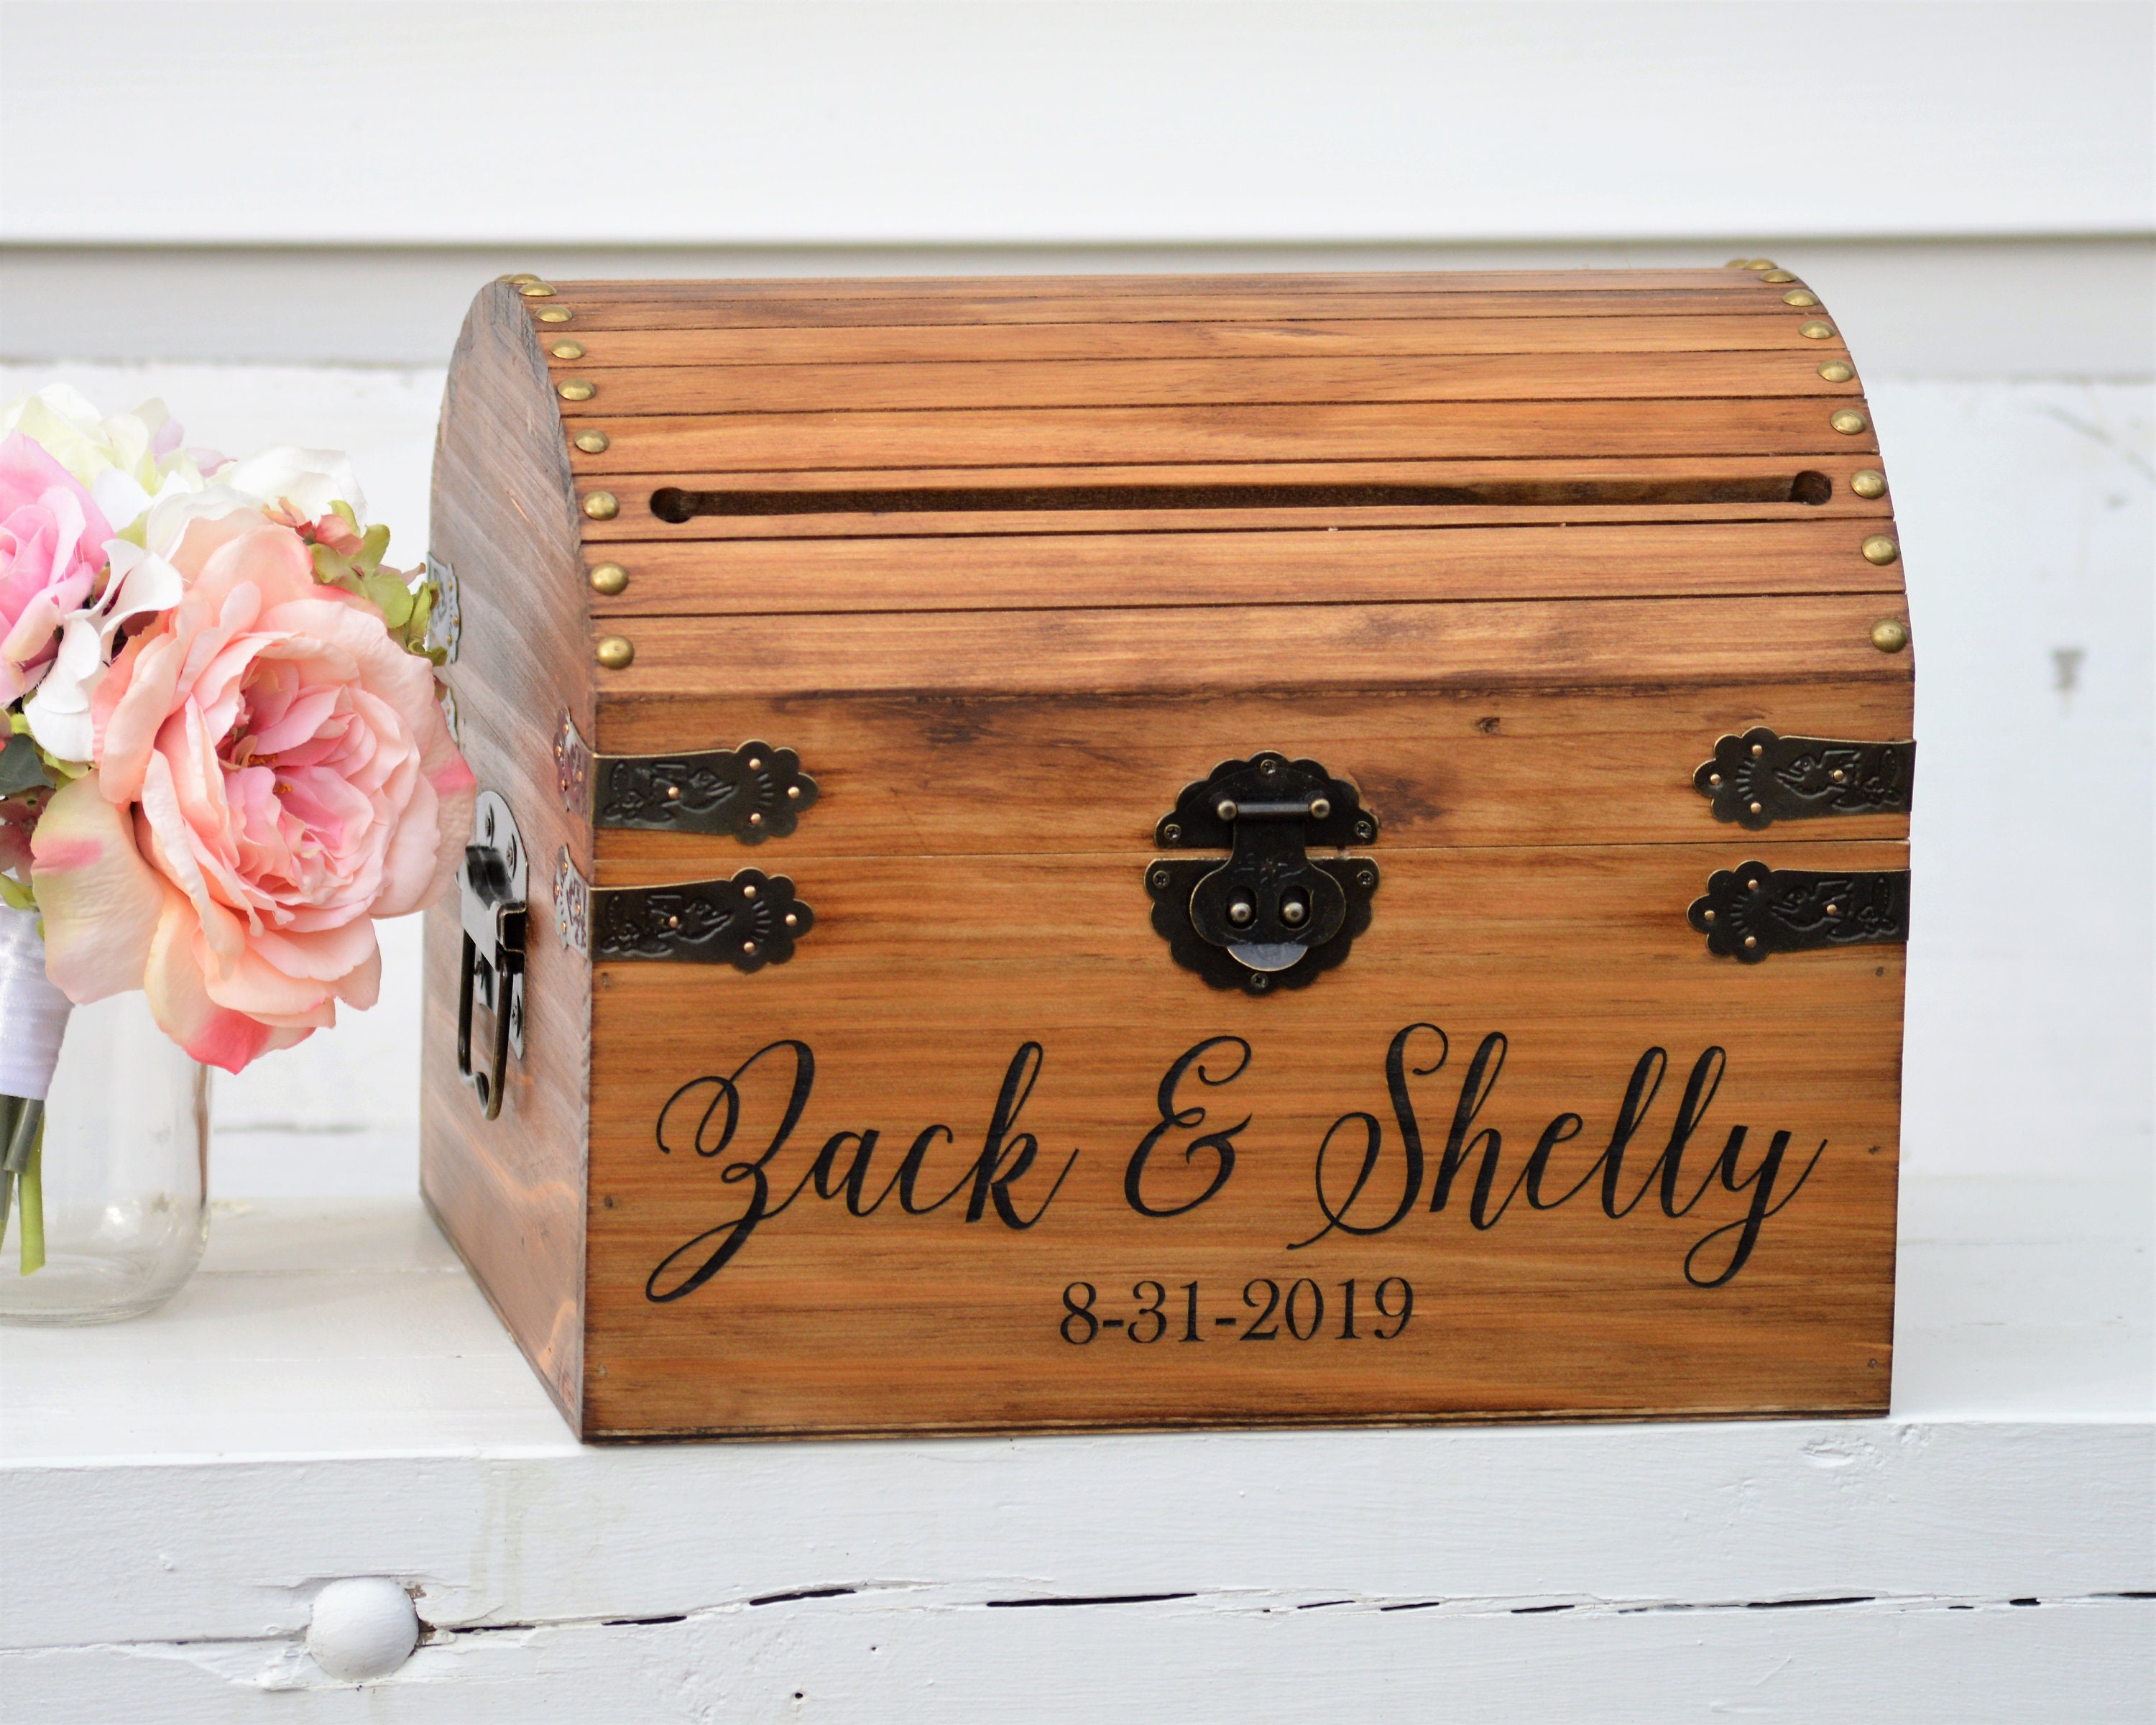 Vintage Wooden Wedding Card HEART Post Box ~ Rustic Bushel Crate